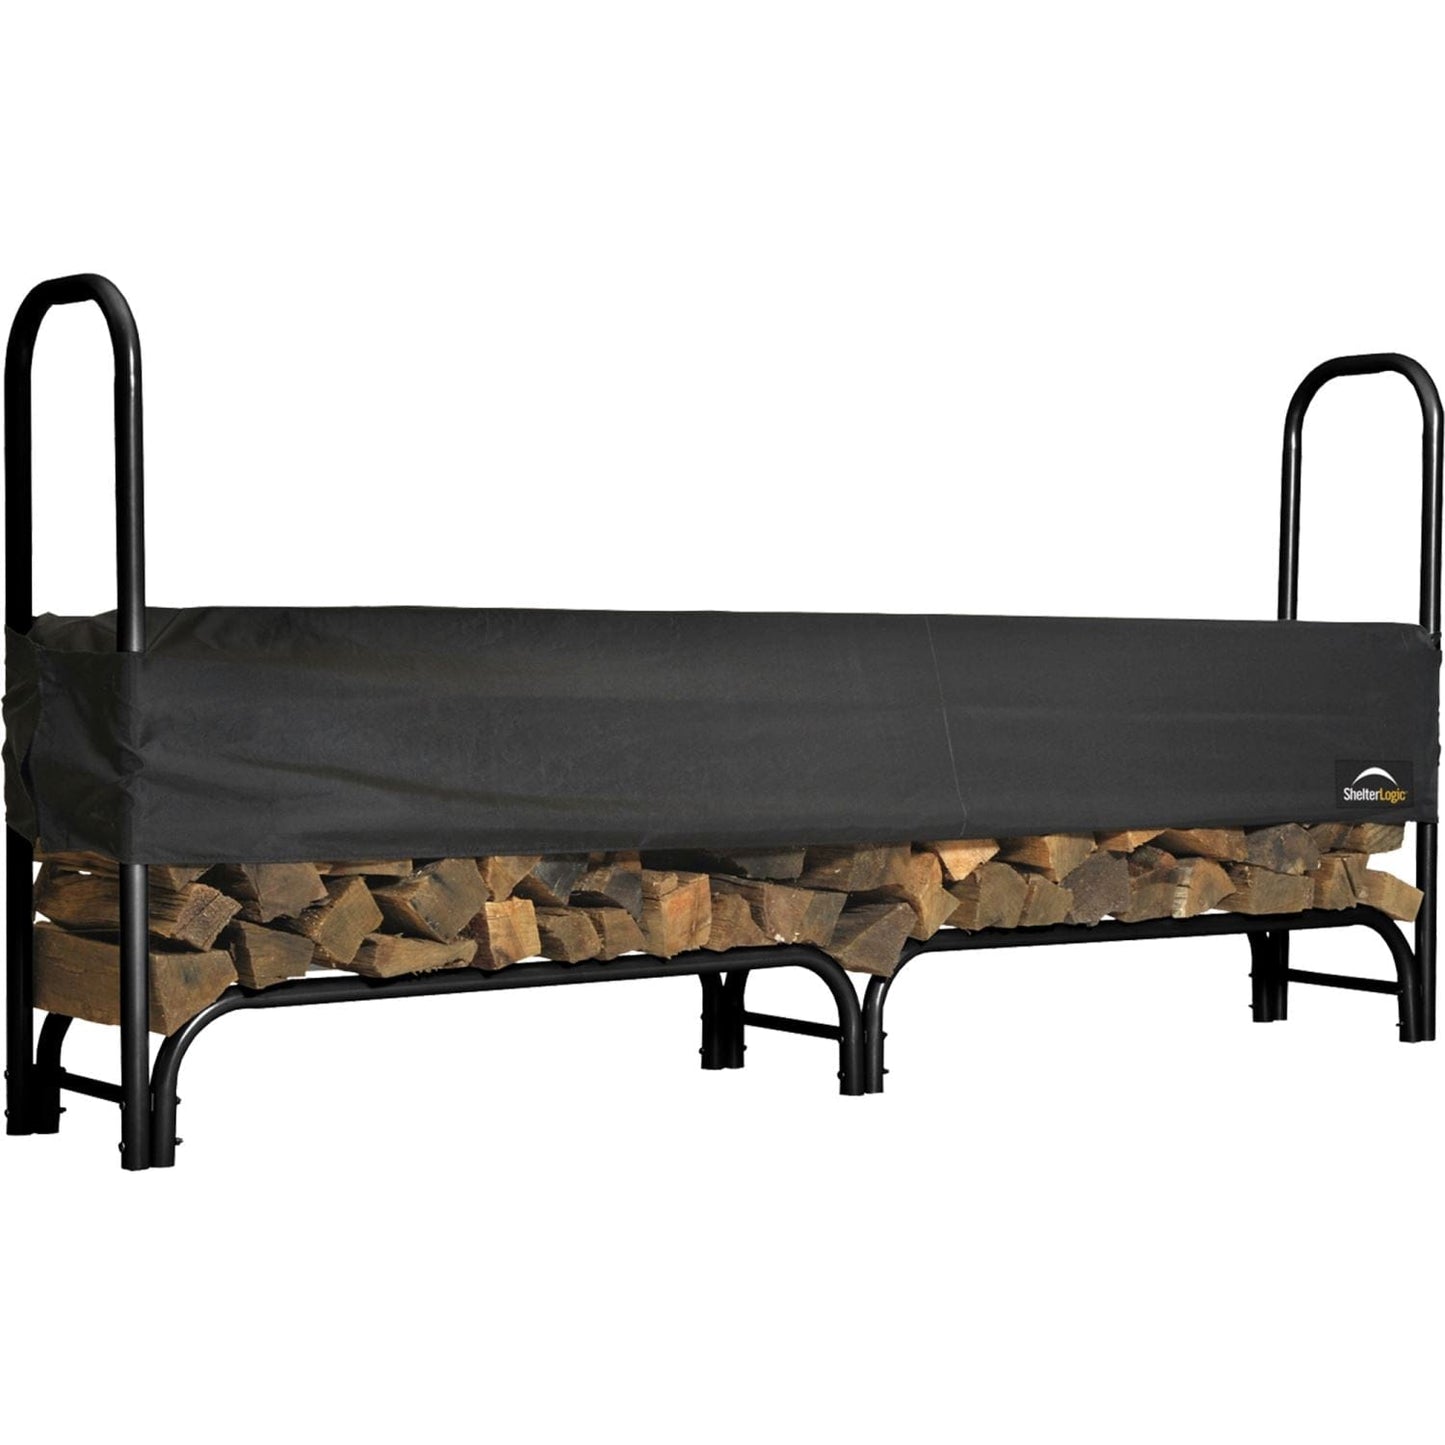 ShelterLogic Firewood & Hearth Products ShelterLogic | Heavy Duty Firewood Rack 8 ft. With Cover 90402